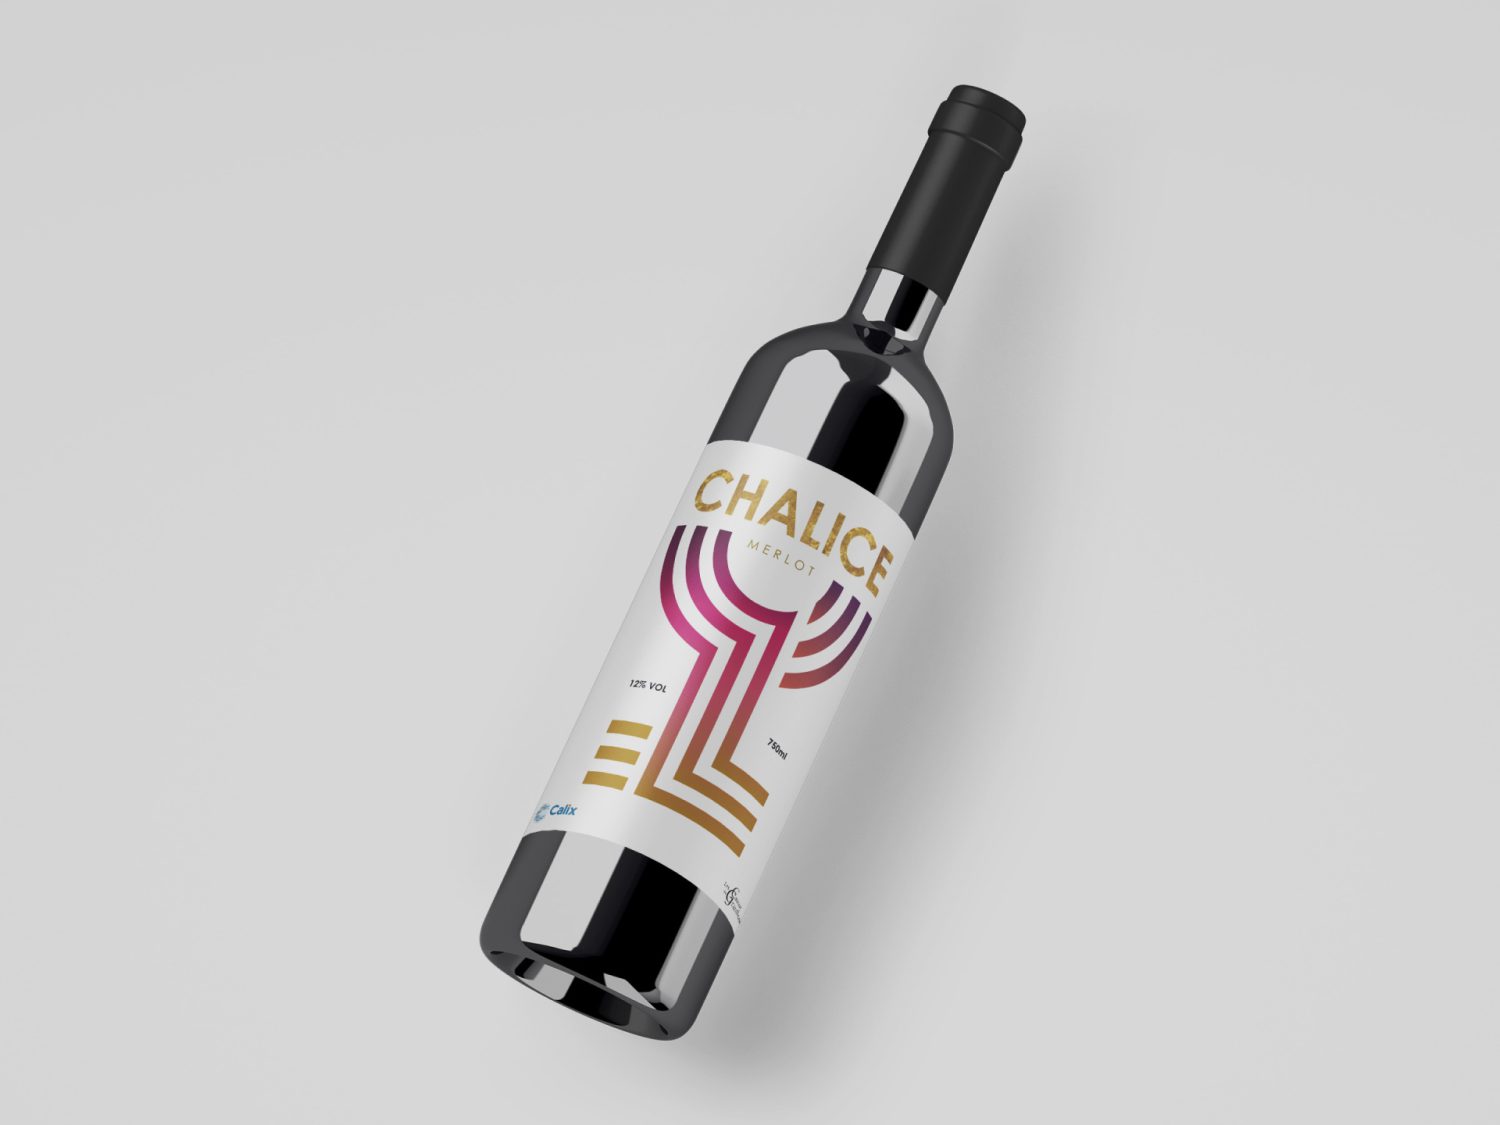 Chalice Wine, branded wine bottle design